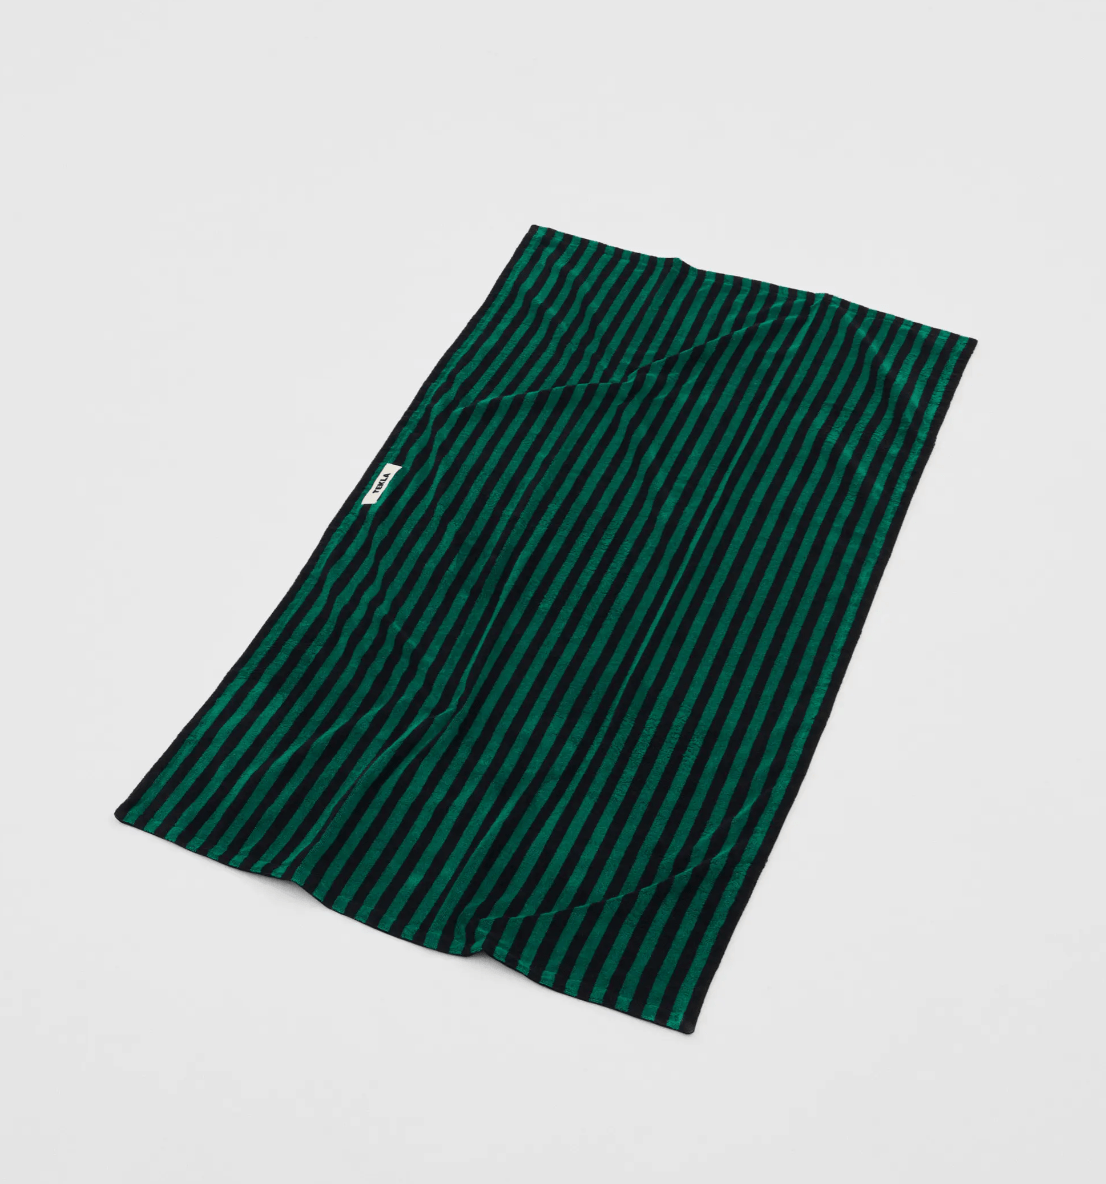 Beach towel, green and black stripes